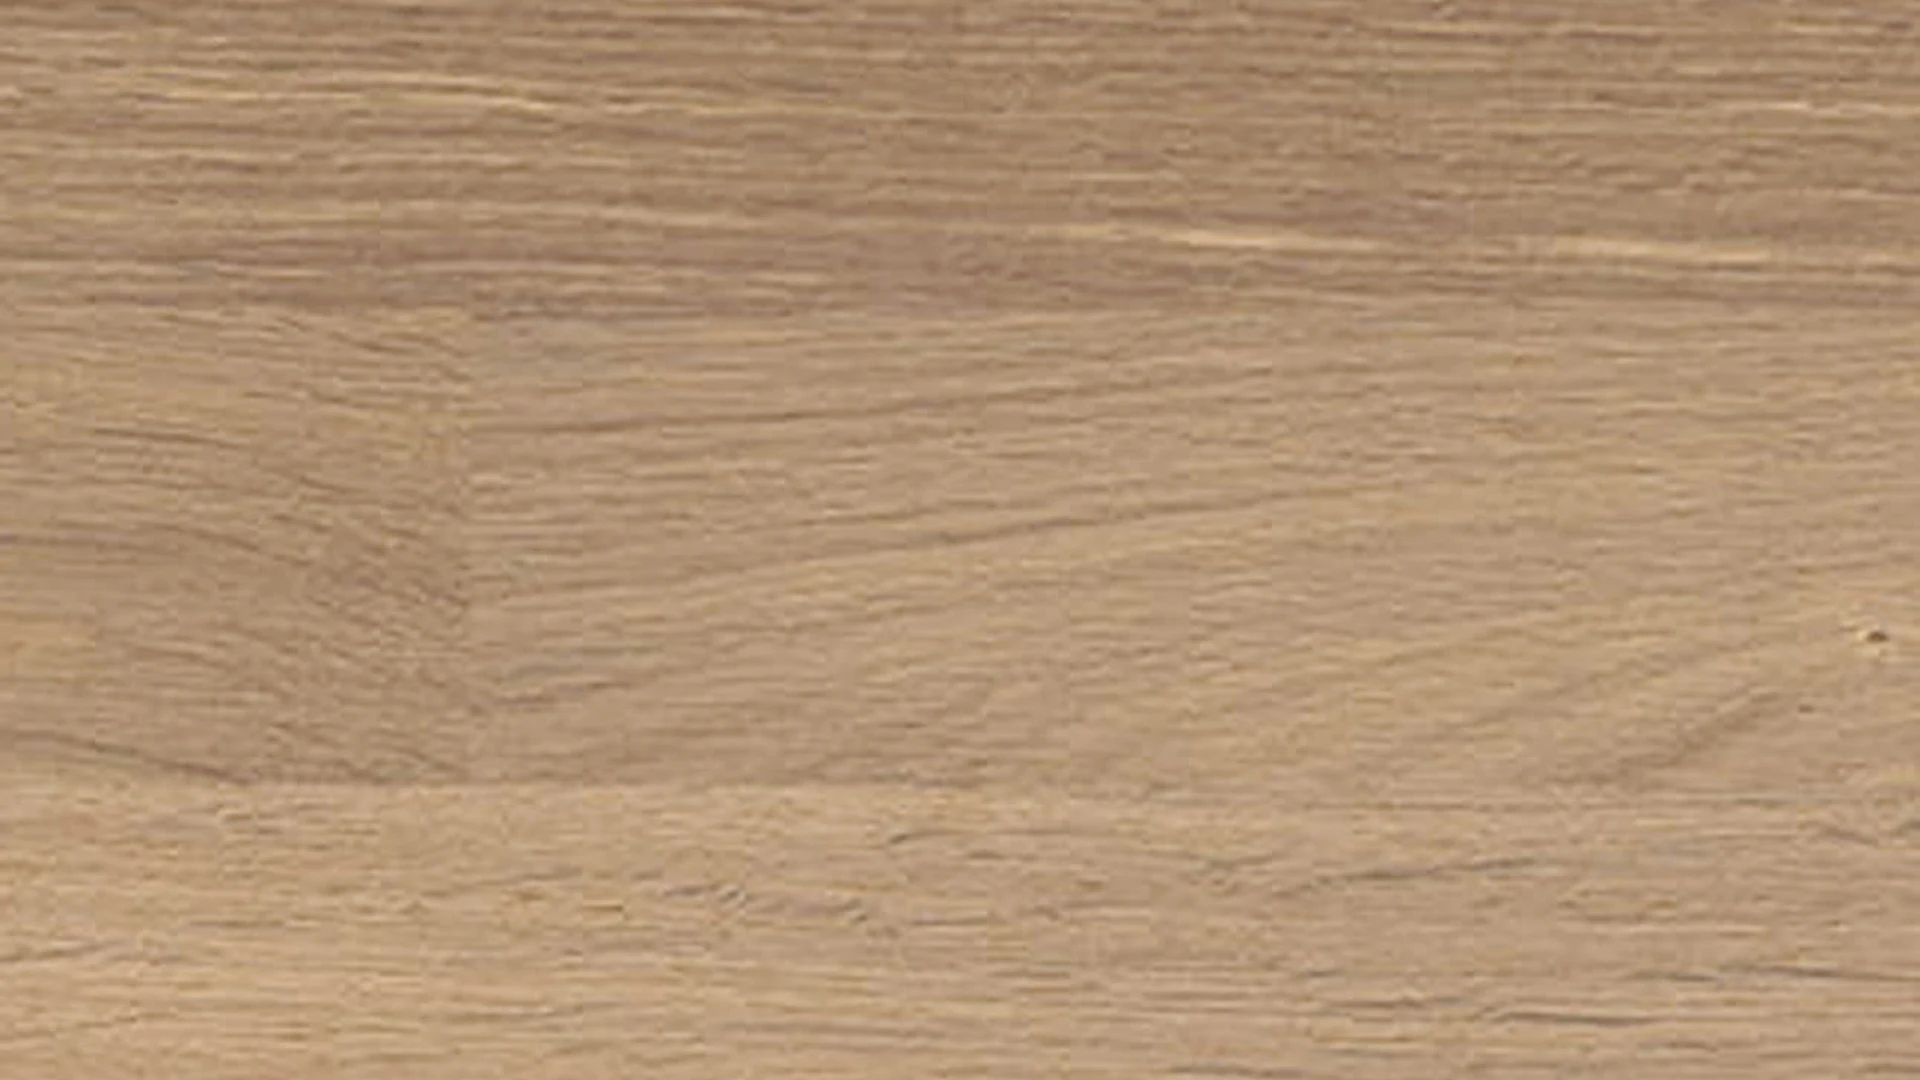 Haro Parquet Flooring - Series 4000 Stab Allegro naturaLin plus Smoked Oak puro white Trend (540130)